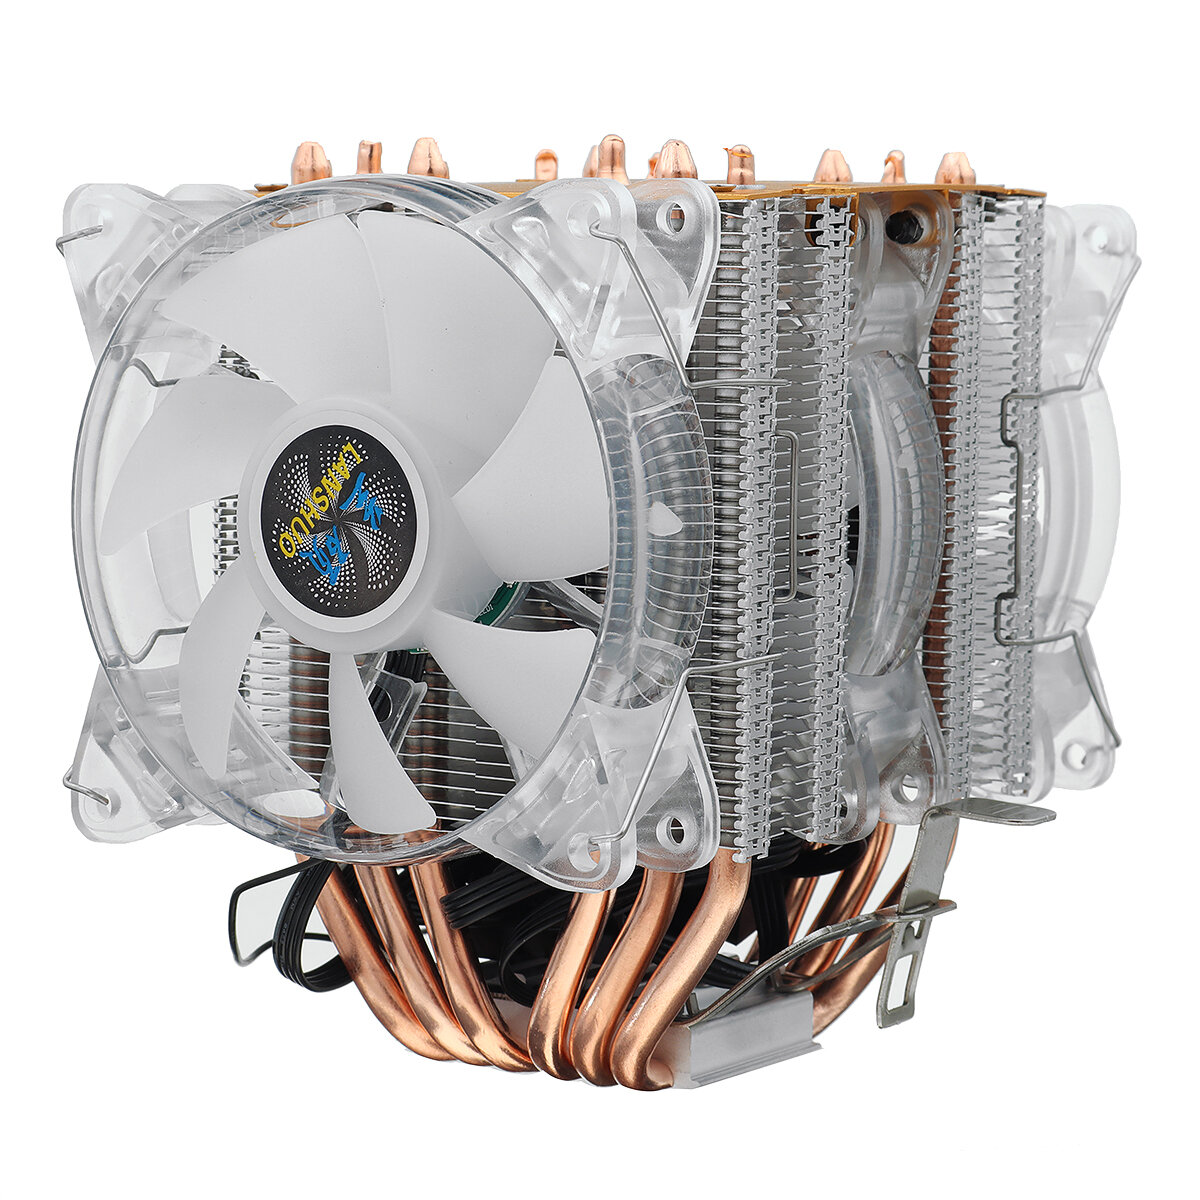 

1/2/3 Fans 4Pin 6 Heatpipes Colorful Backlit CPU Cooling Fan Cooler Heatsink for Intel AMD